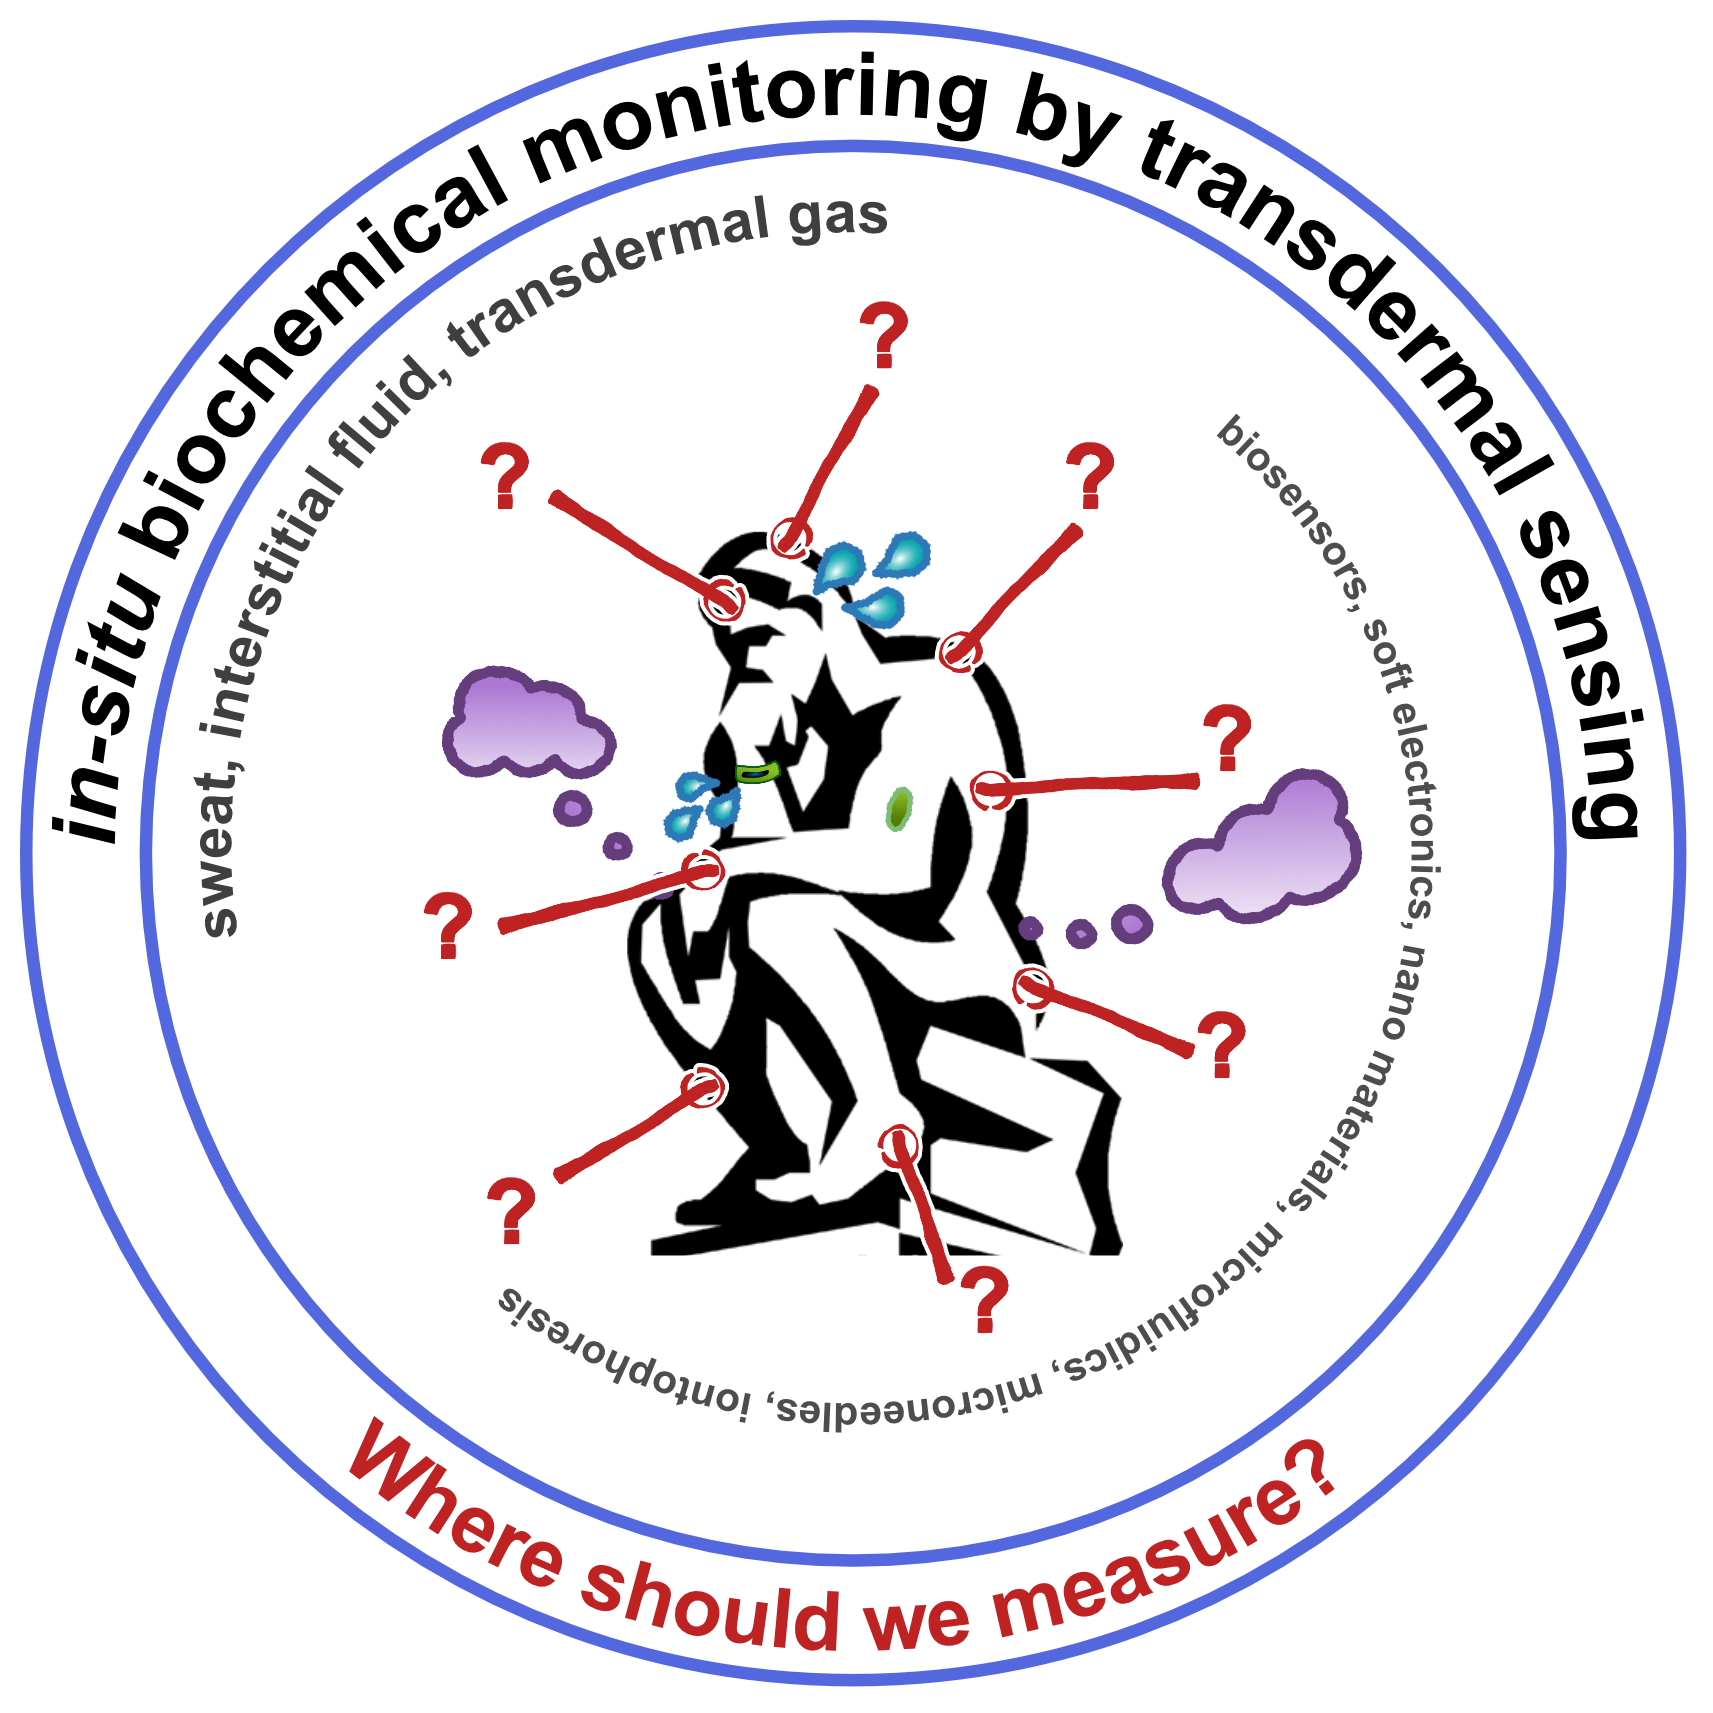 Transdermal sensing: in-situ non-invasive techniques for monitoring of human biochemical status